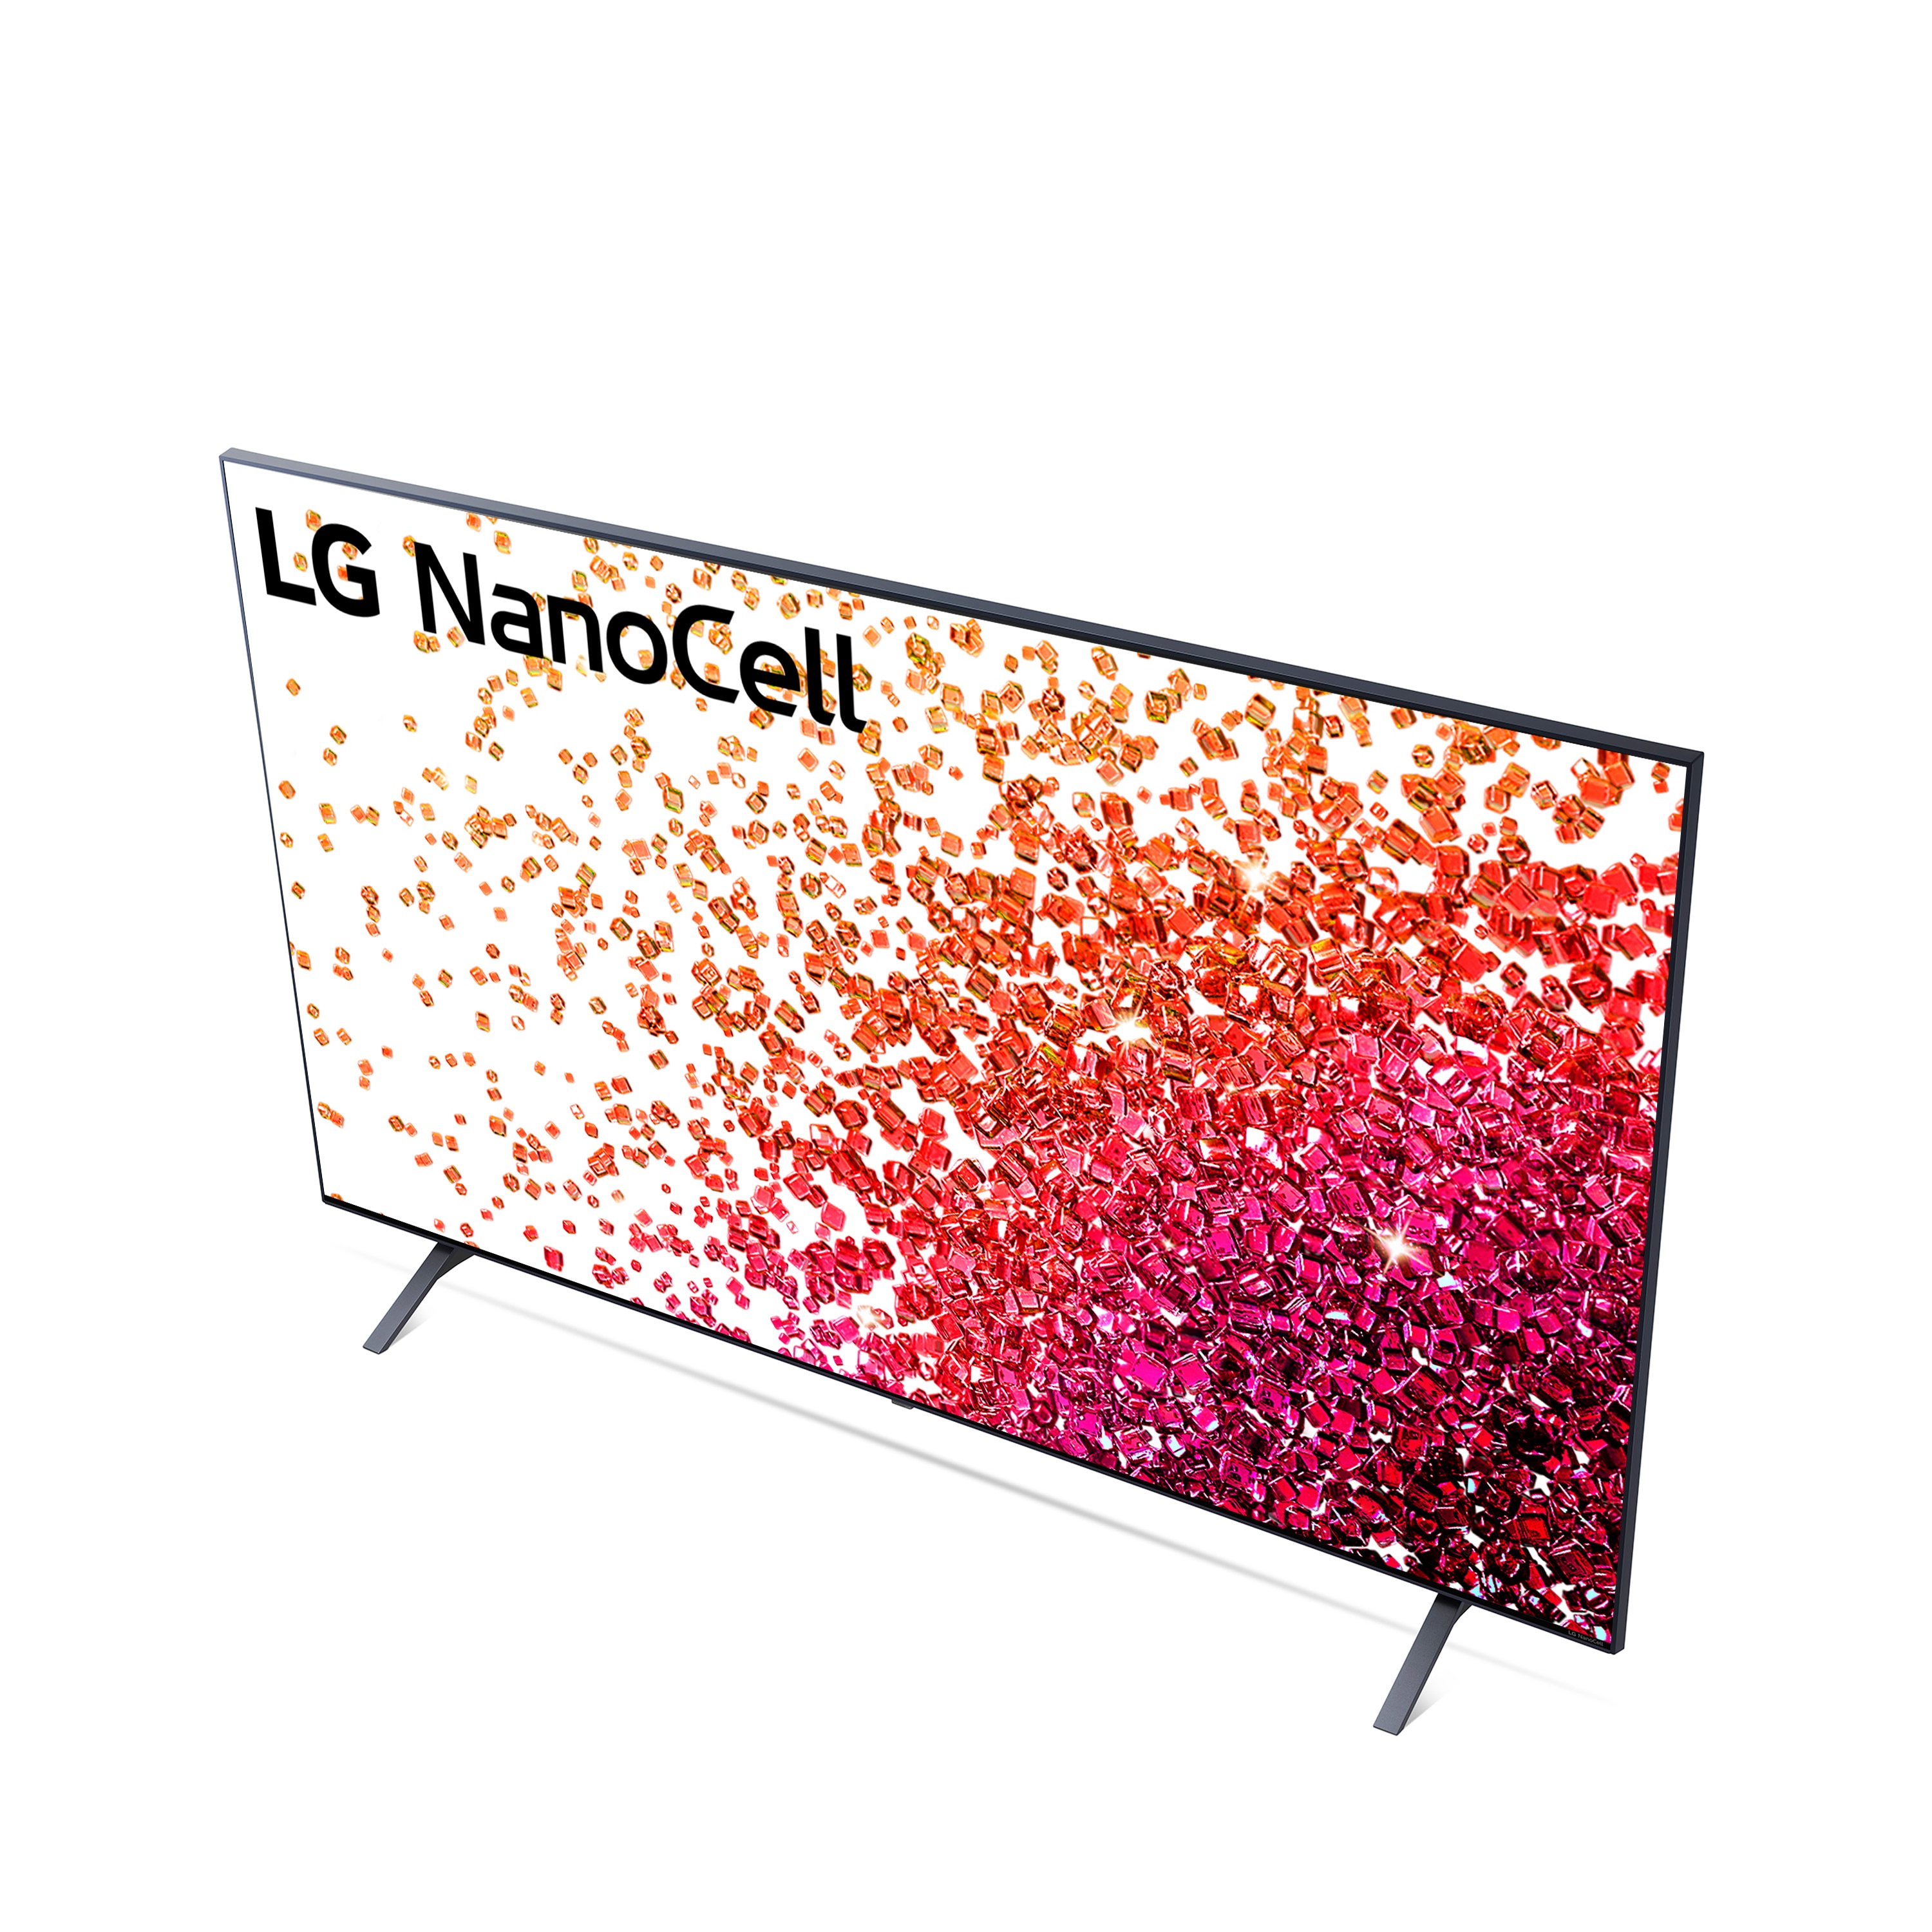 LG 50 CLASS NANOCELL 75 SERIES 4K UHD SMART TV | 50NAN075UPA